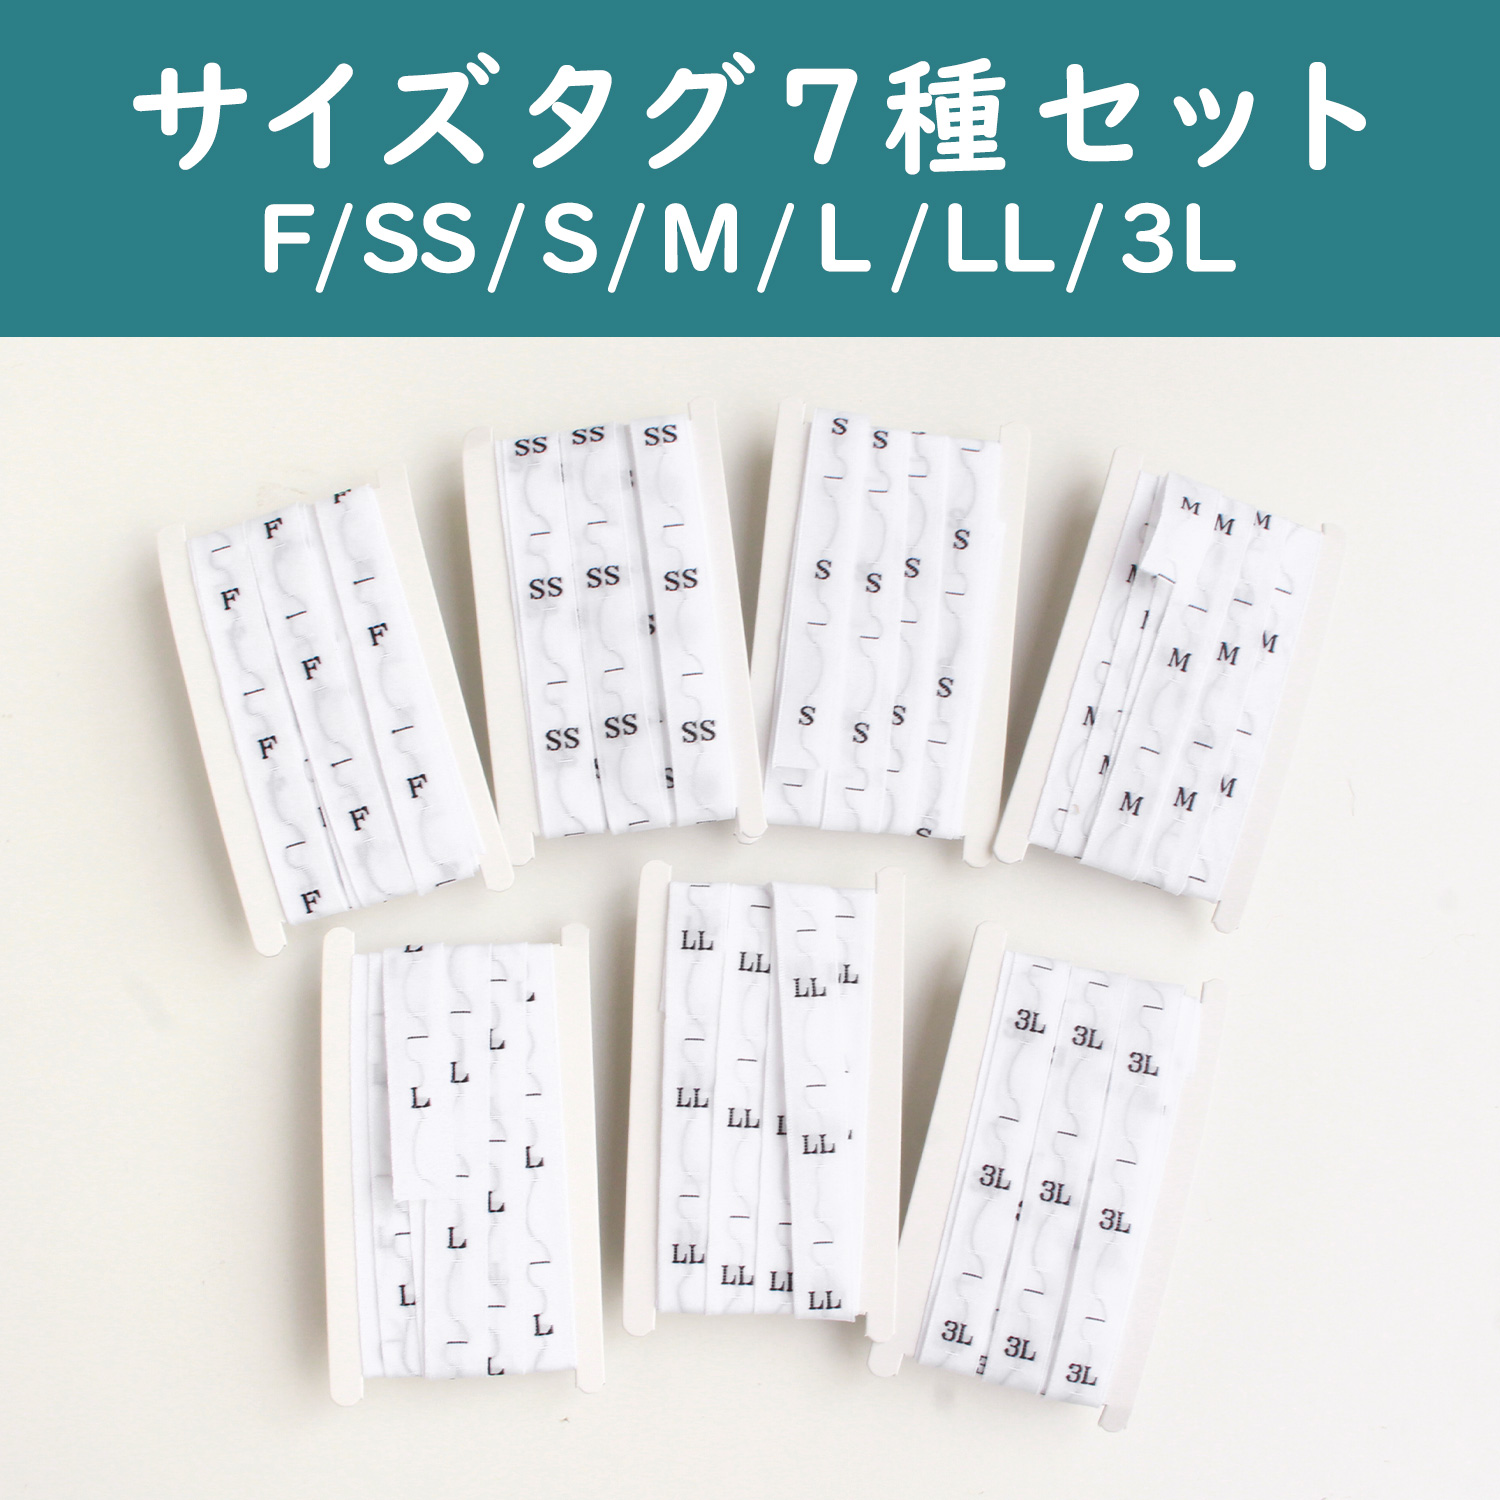 TMESS-FSET size tag set (set)